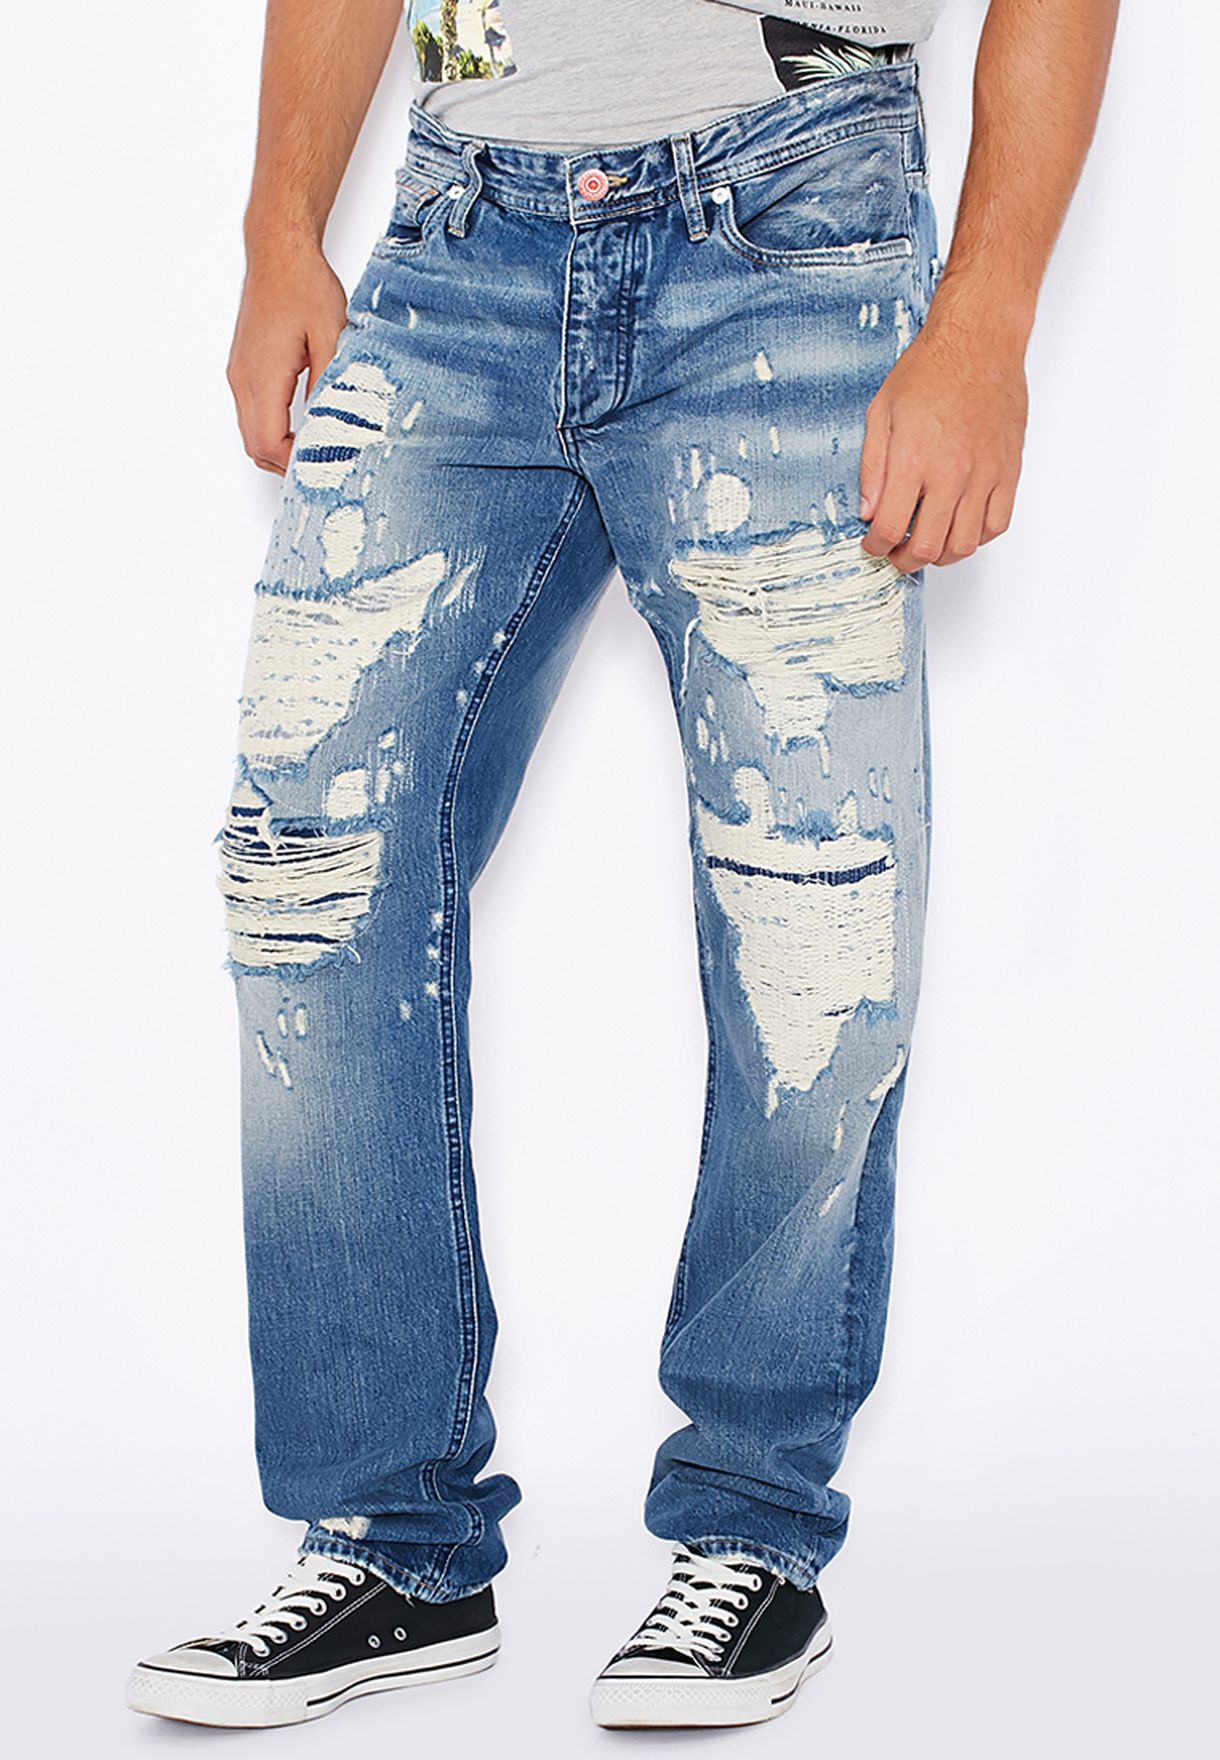 mike armani jeans